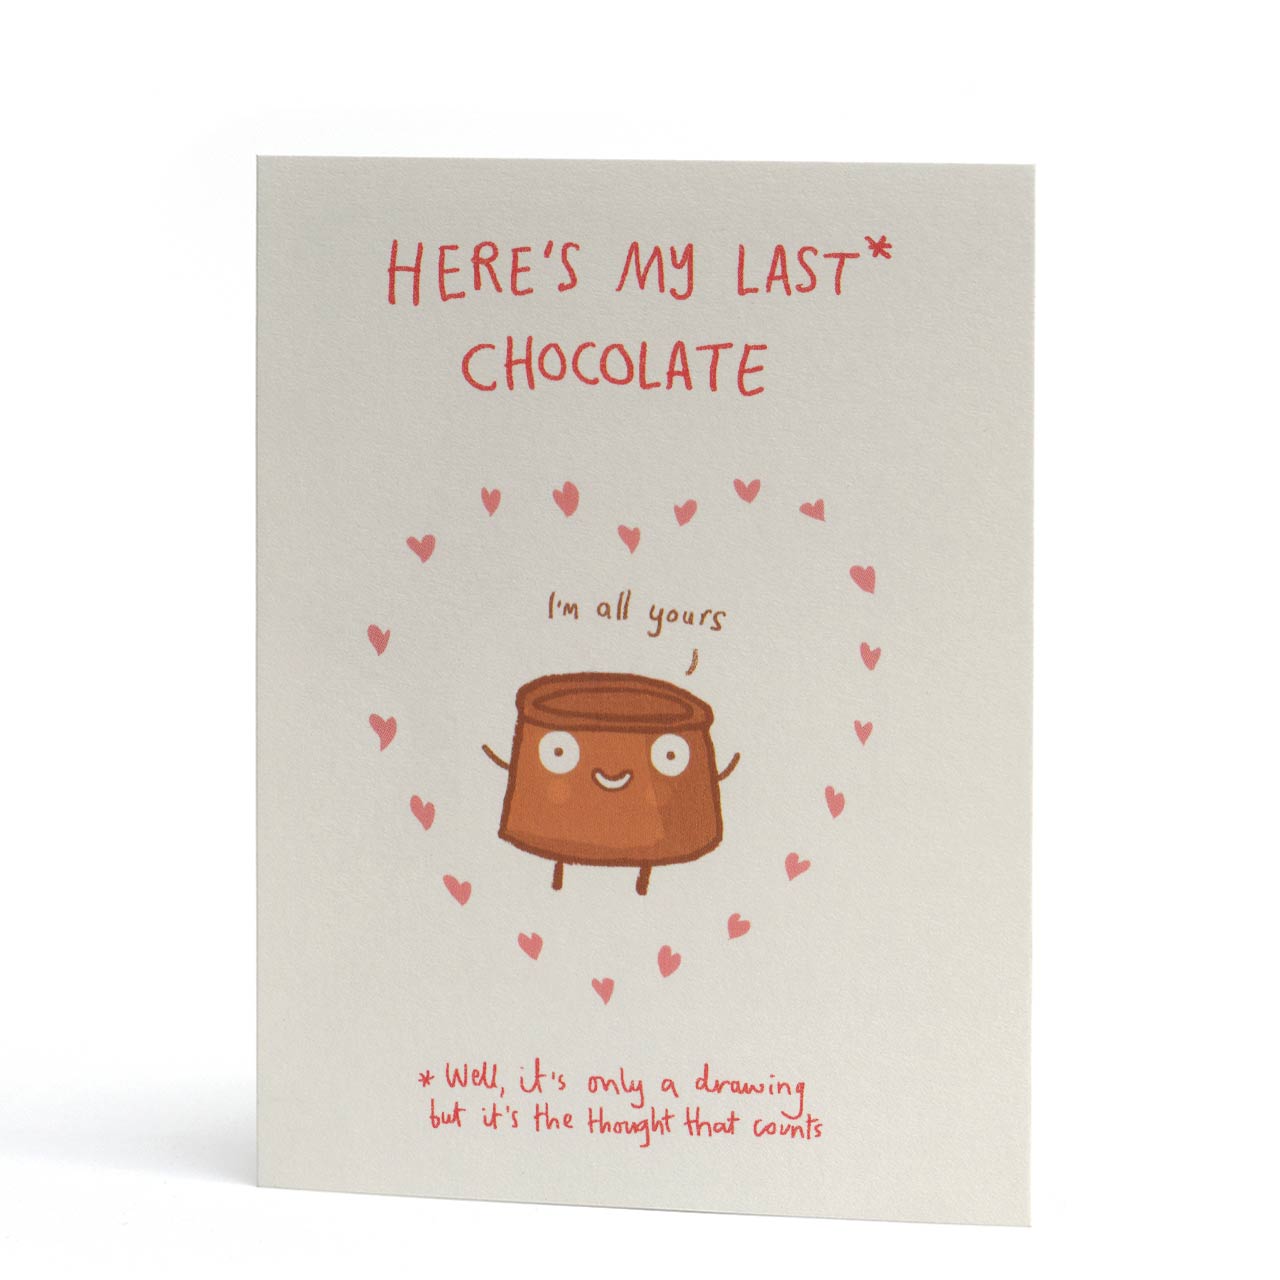 My Last Chocolate Greeting Card